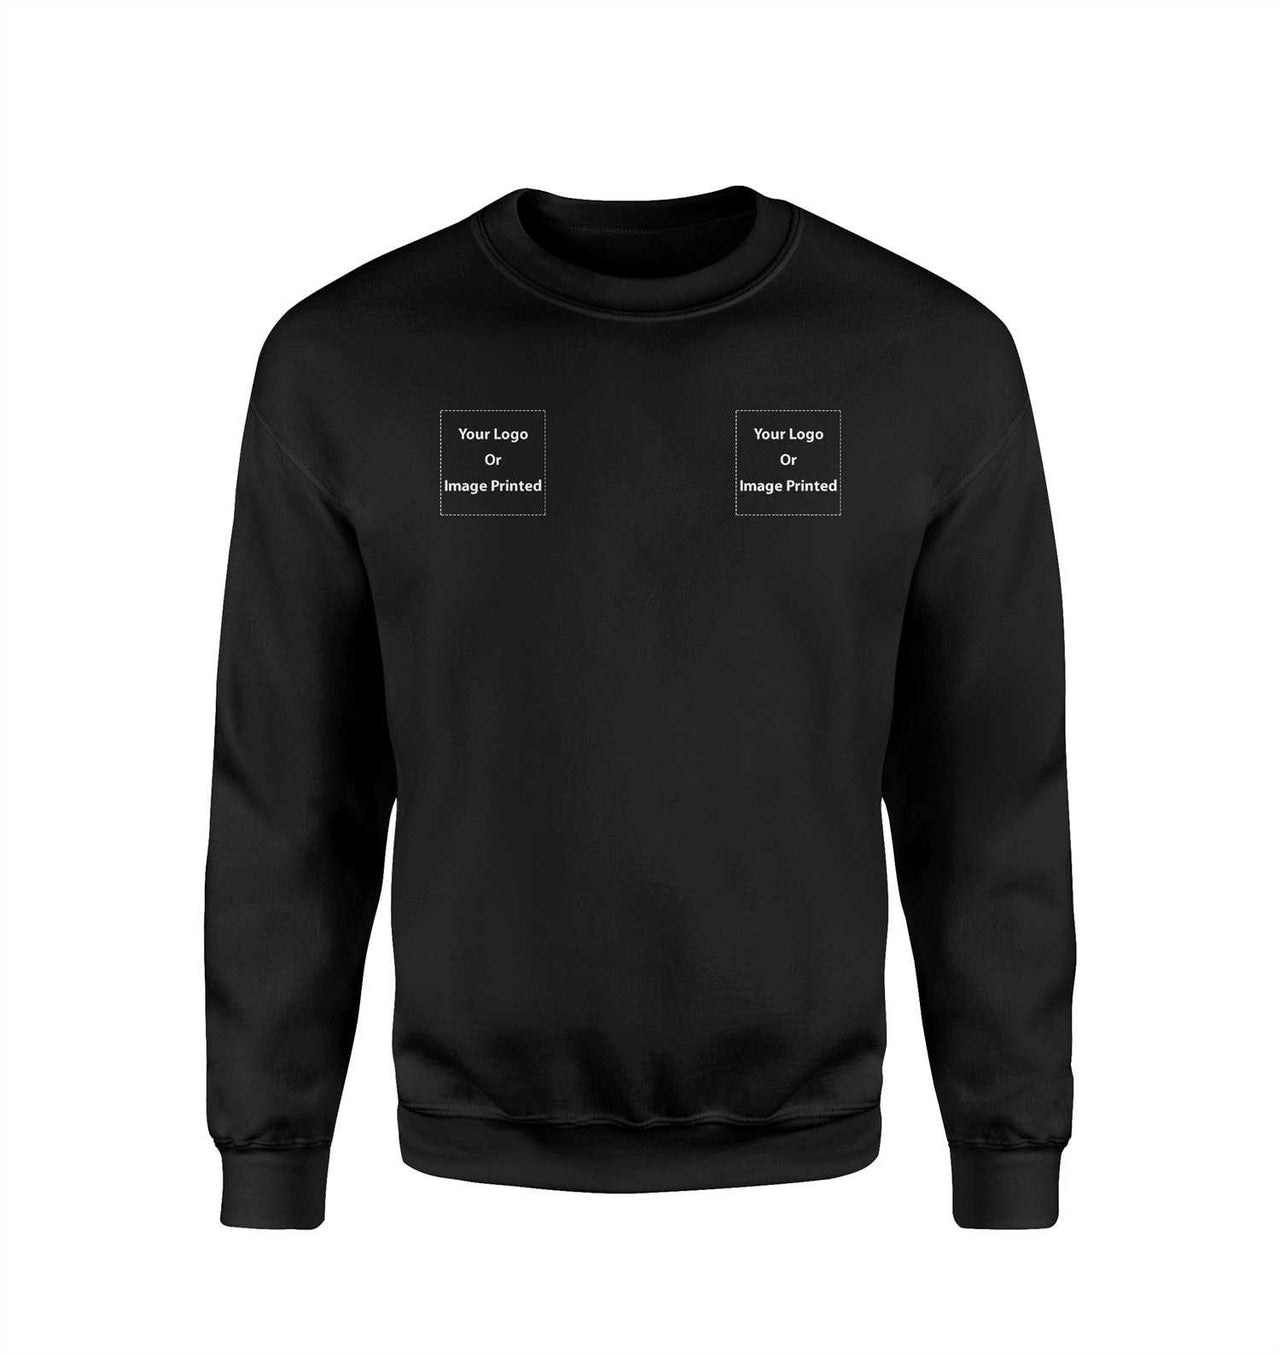 CUSTOM (Double) Logos Designed Sweatshirts